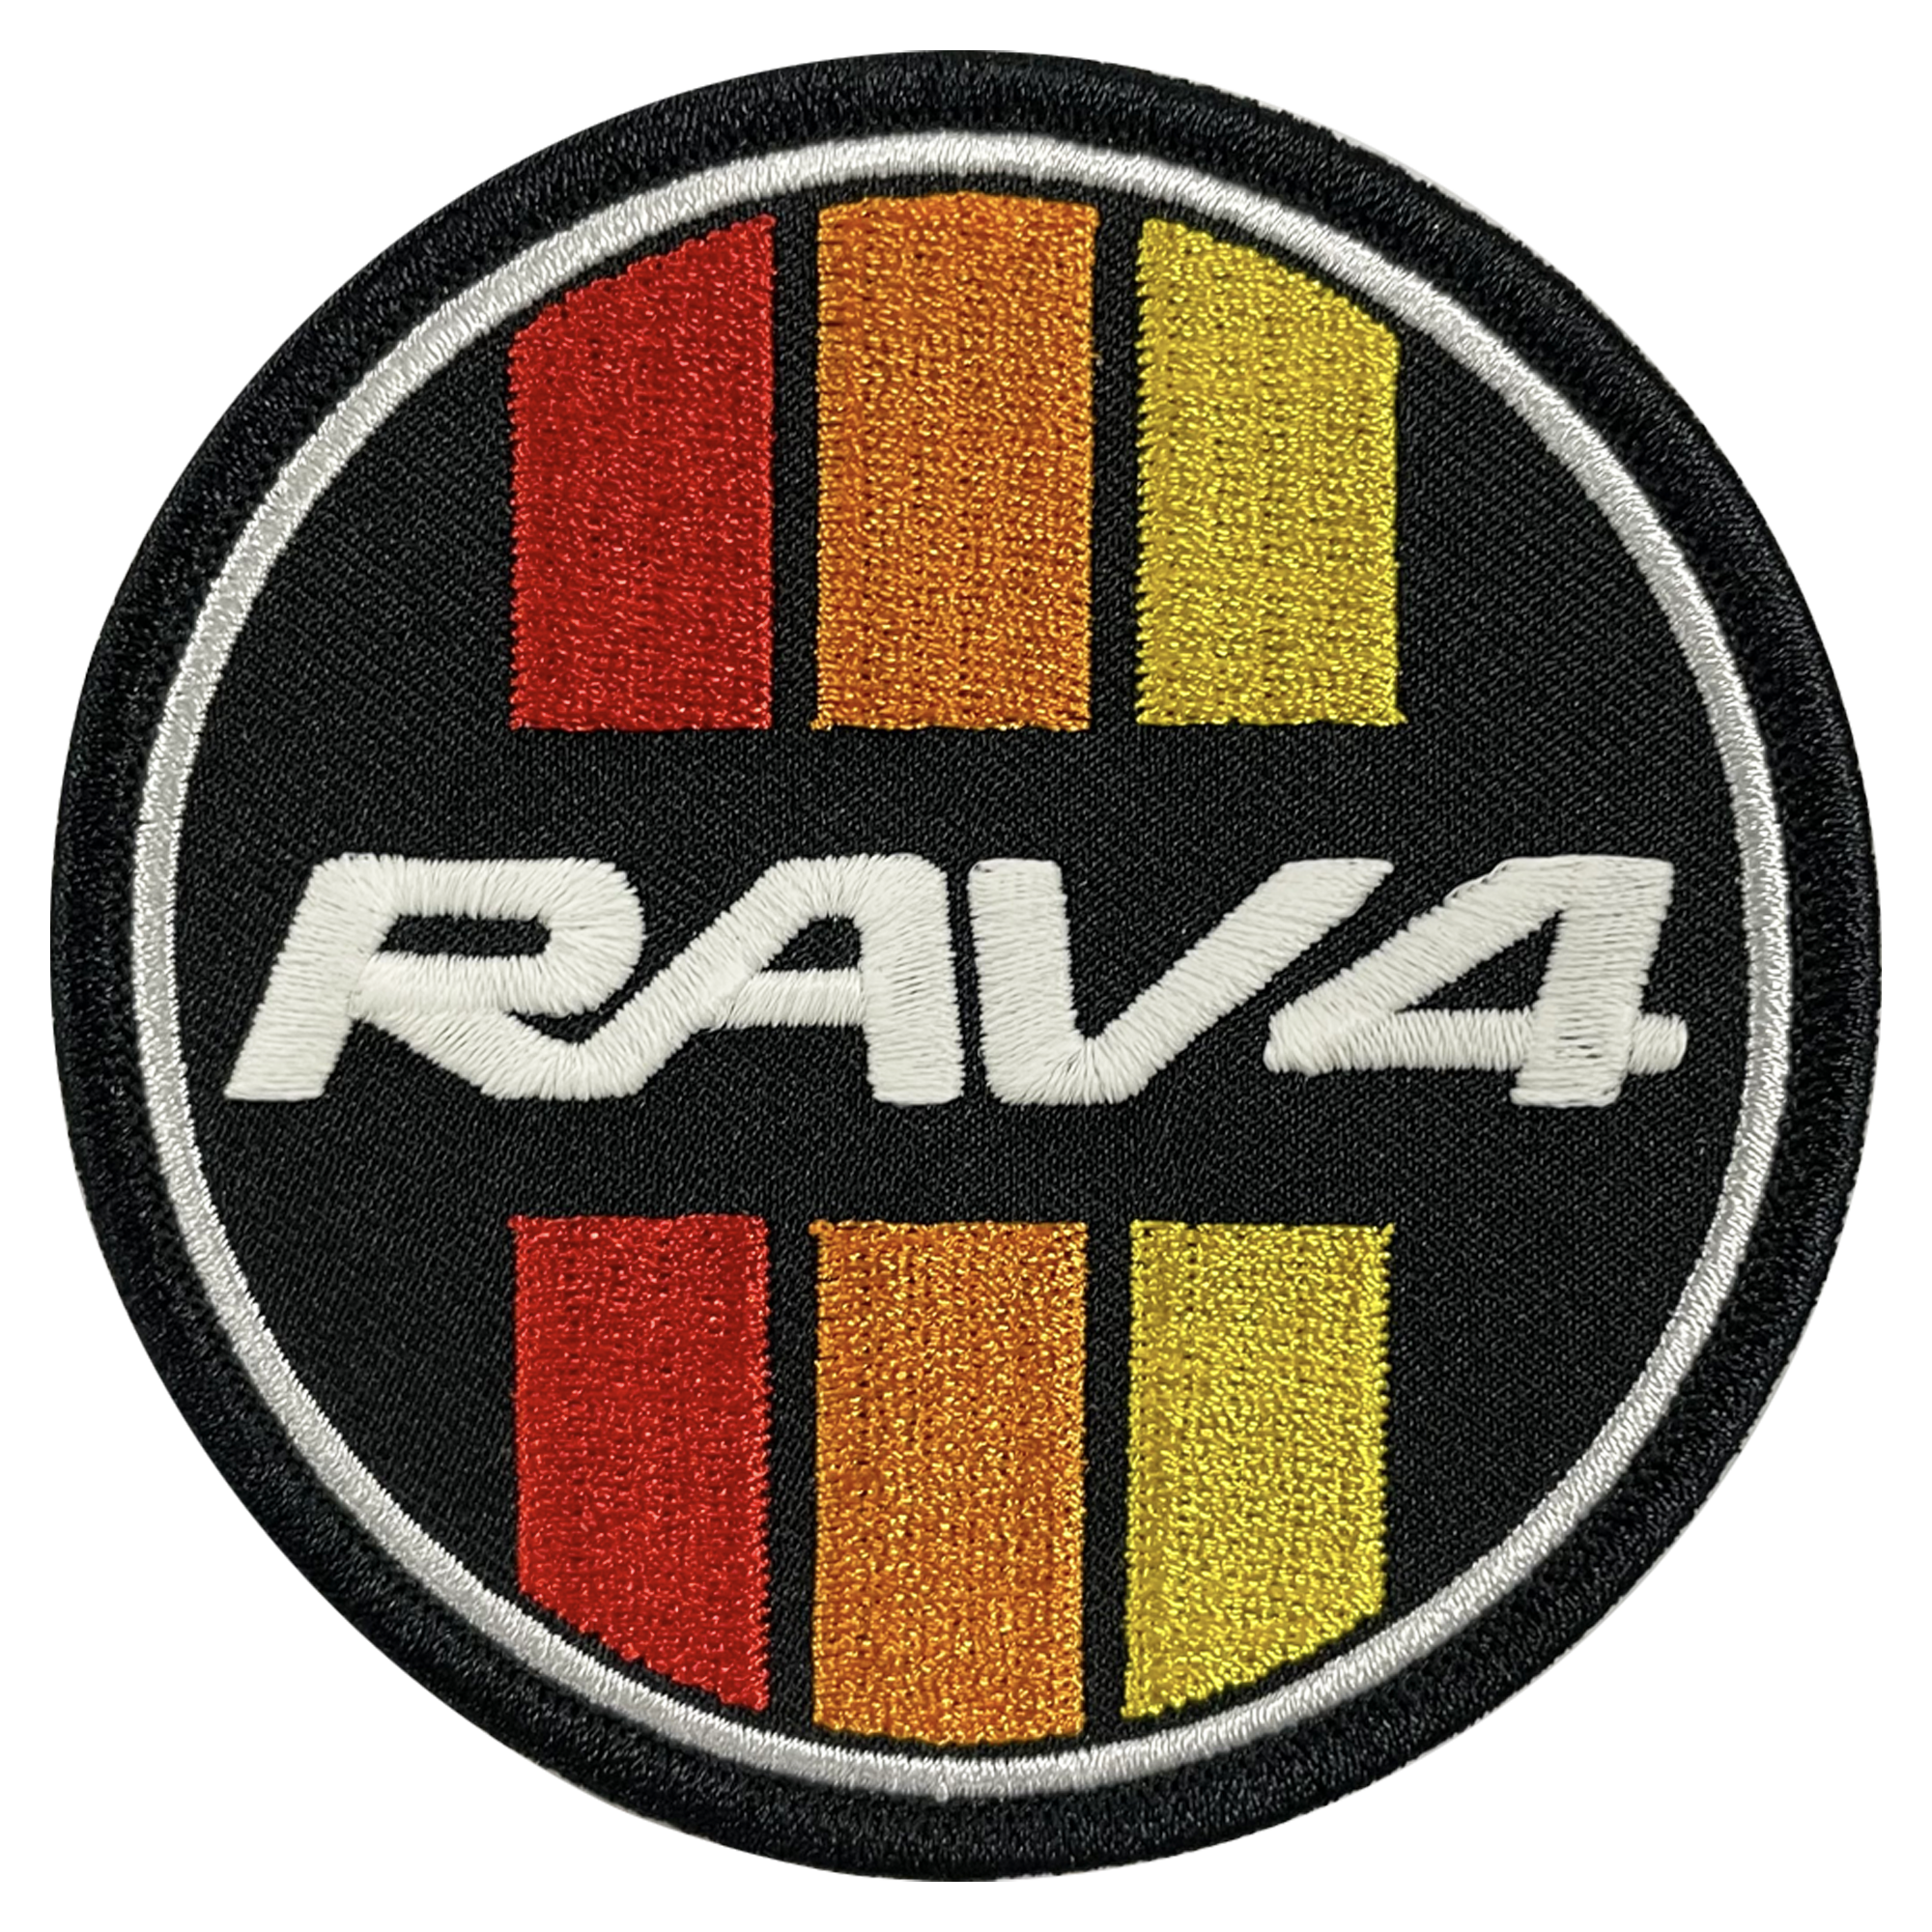 RAV4 Retro Circle Patch - GZila Designs